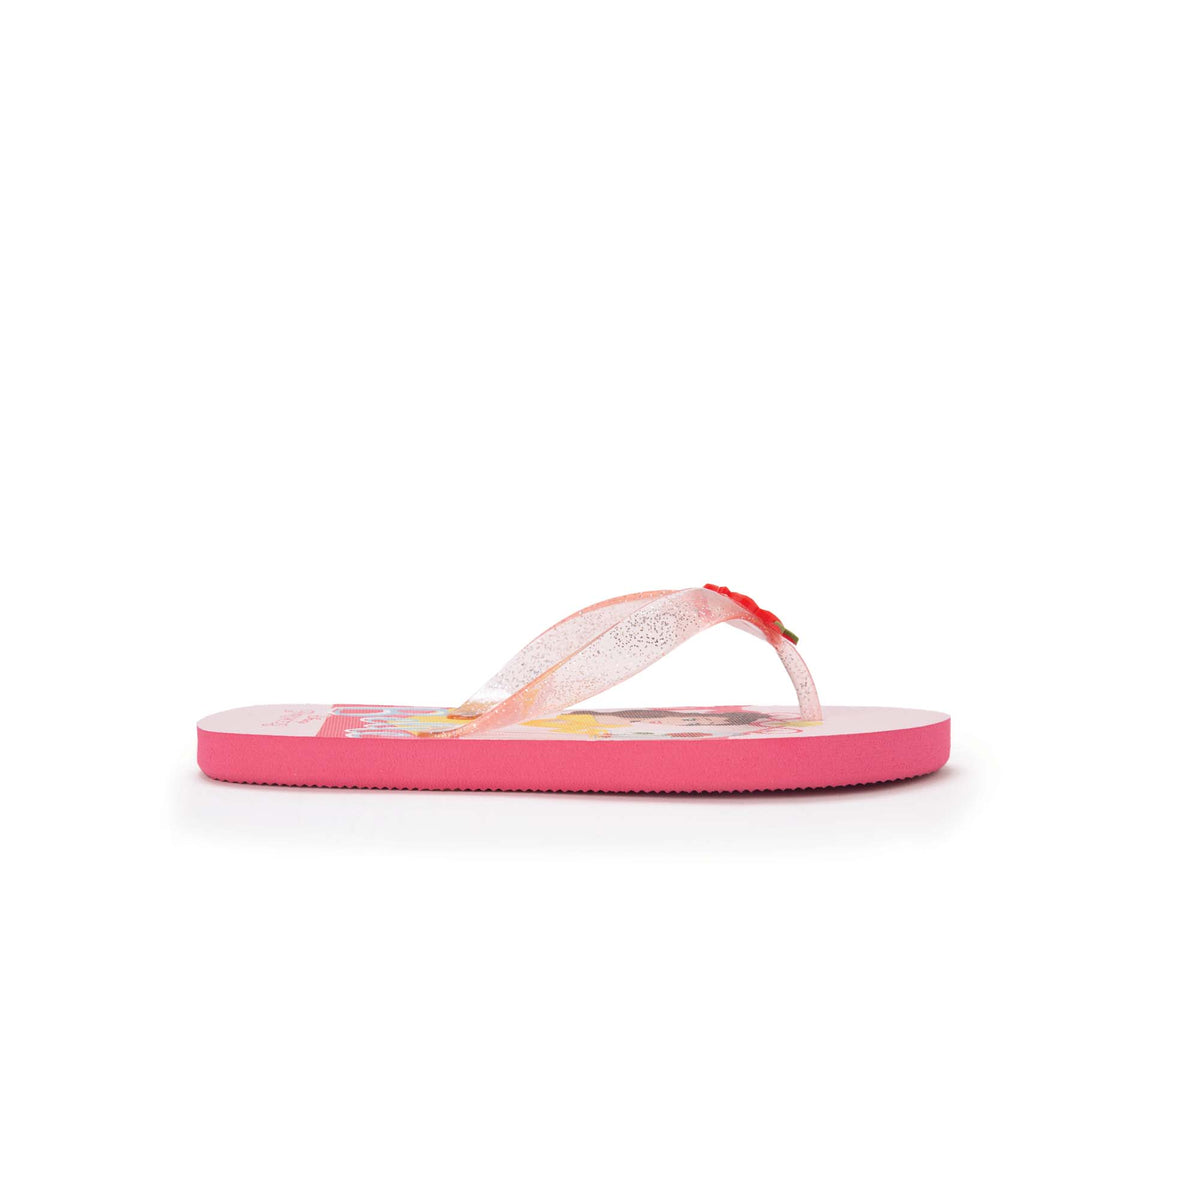 Disney Princess Girls Pink Boot Slippers House Shoes XL 11 12 Bows Pom Poms  Soft | eBay